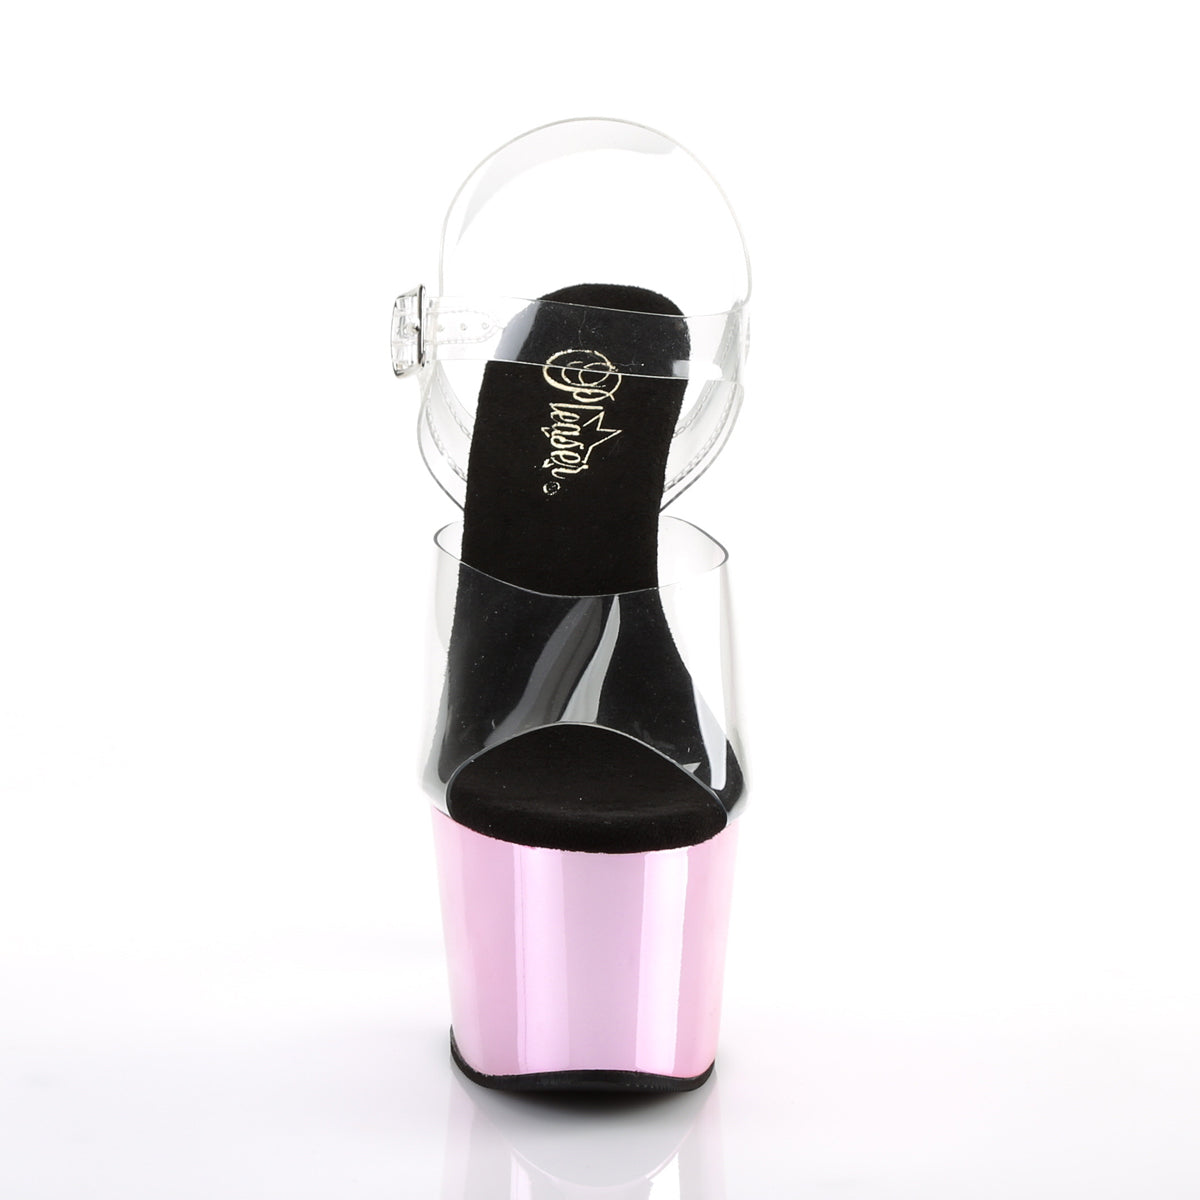 Pleaser Womens Sandals ADORE-708 Clr/B. Pink Chrome